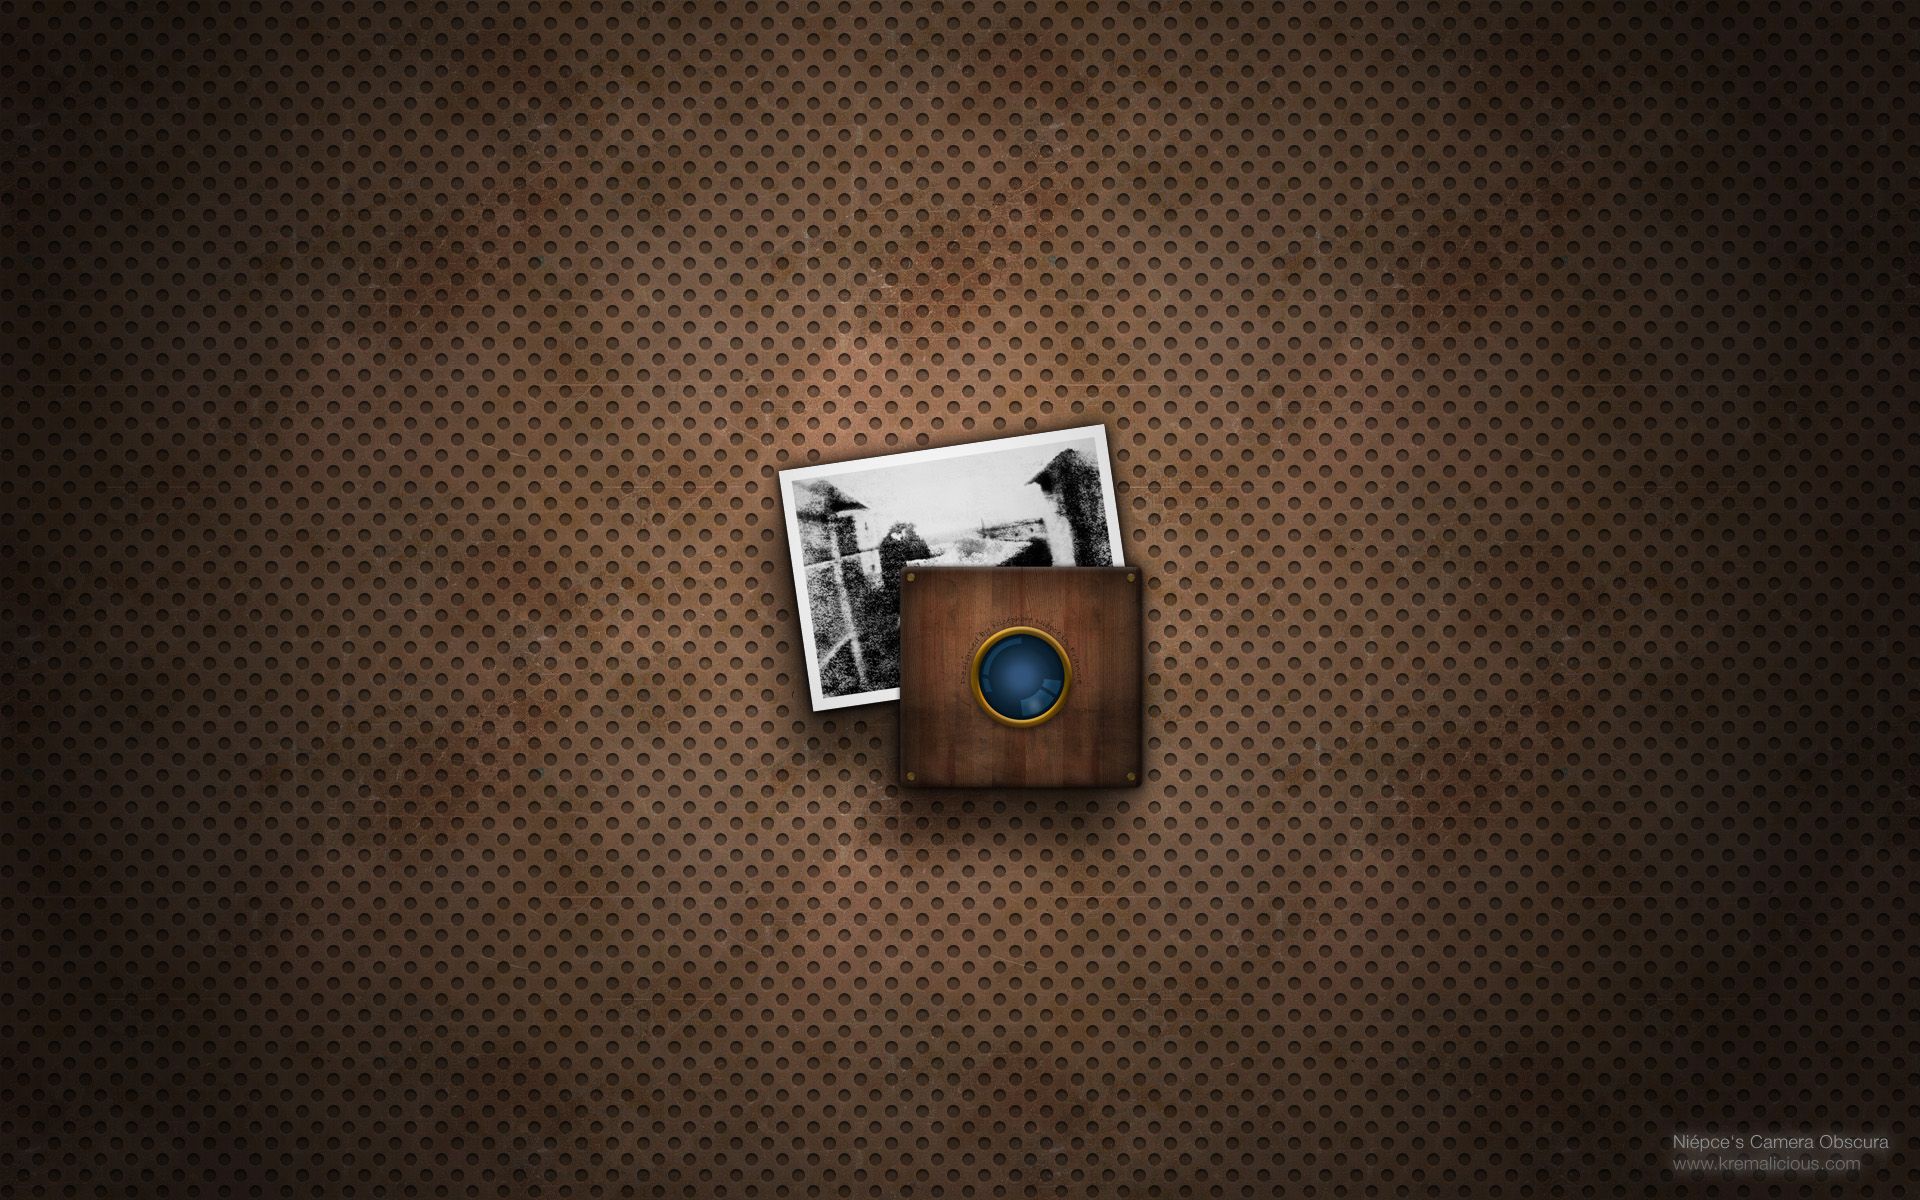 Wallpaper camera - Imgenes de Google We Heart It camera and other